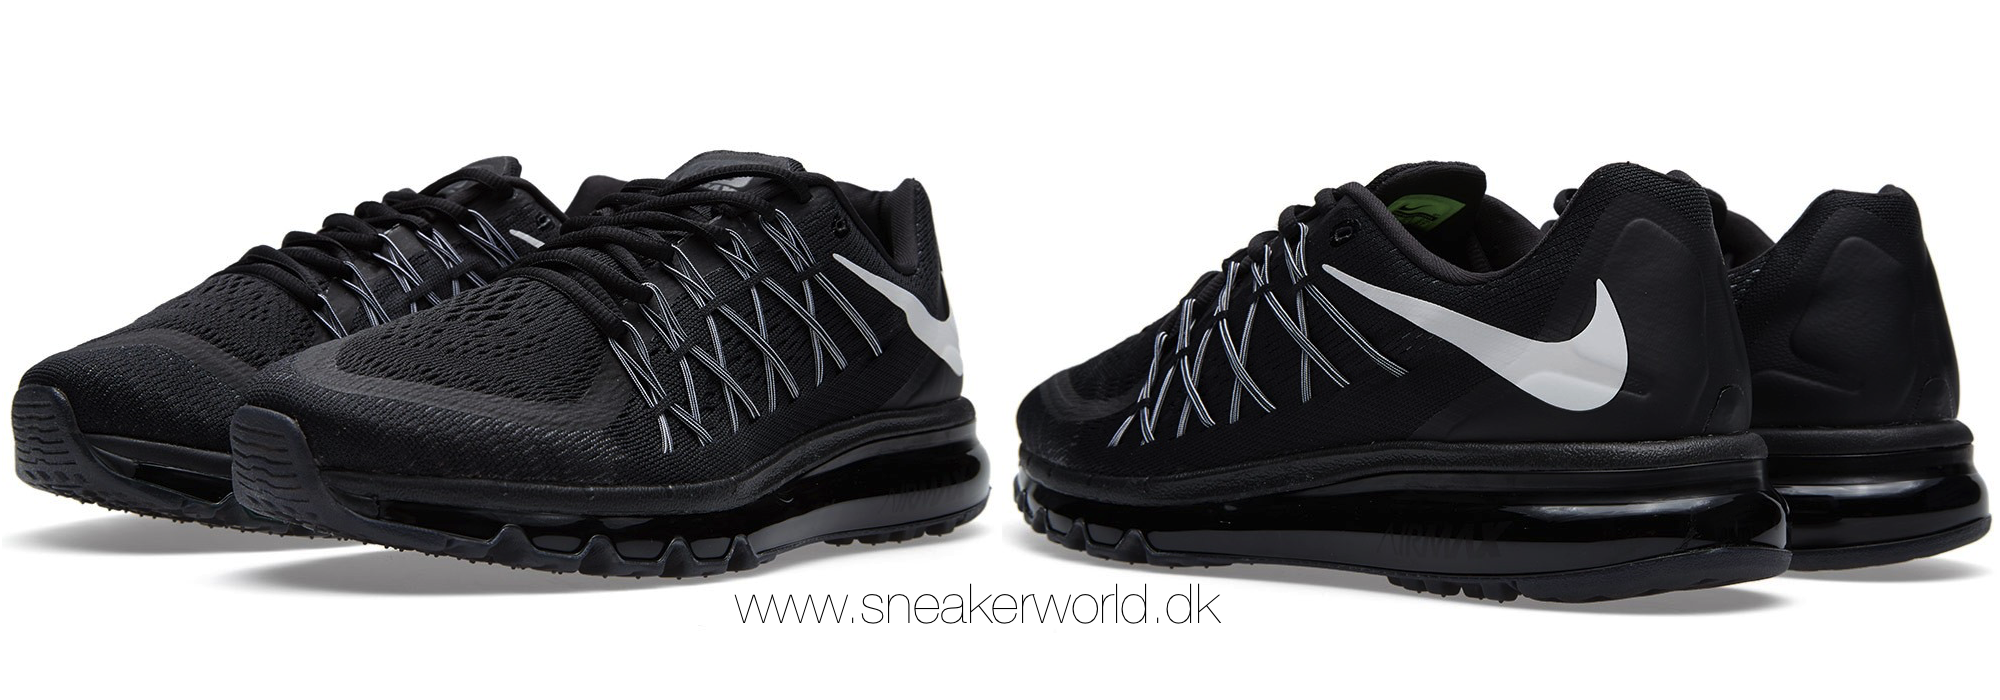 Nike Air Max 2015 Black